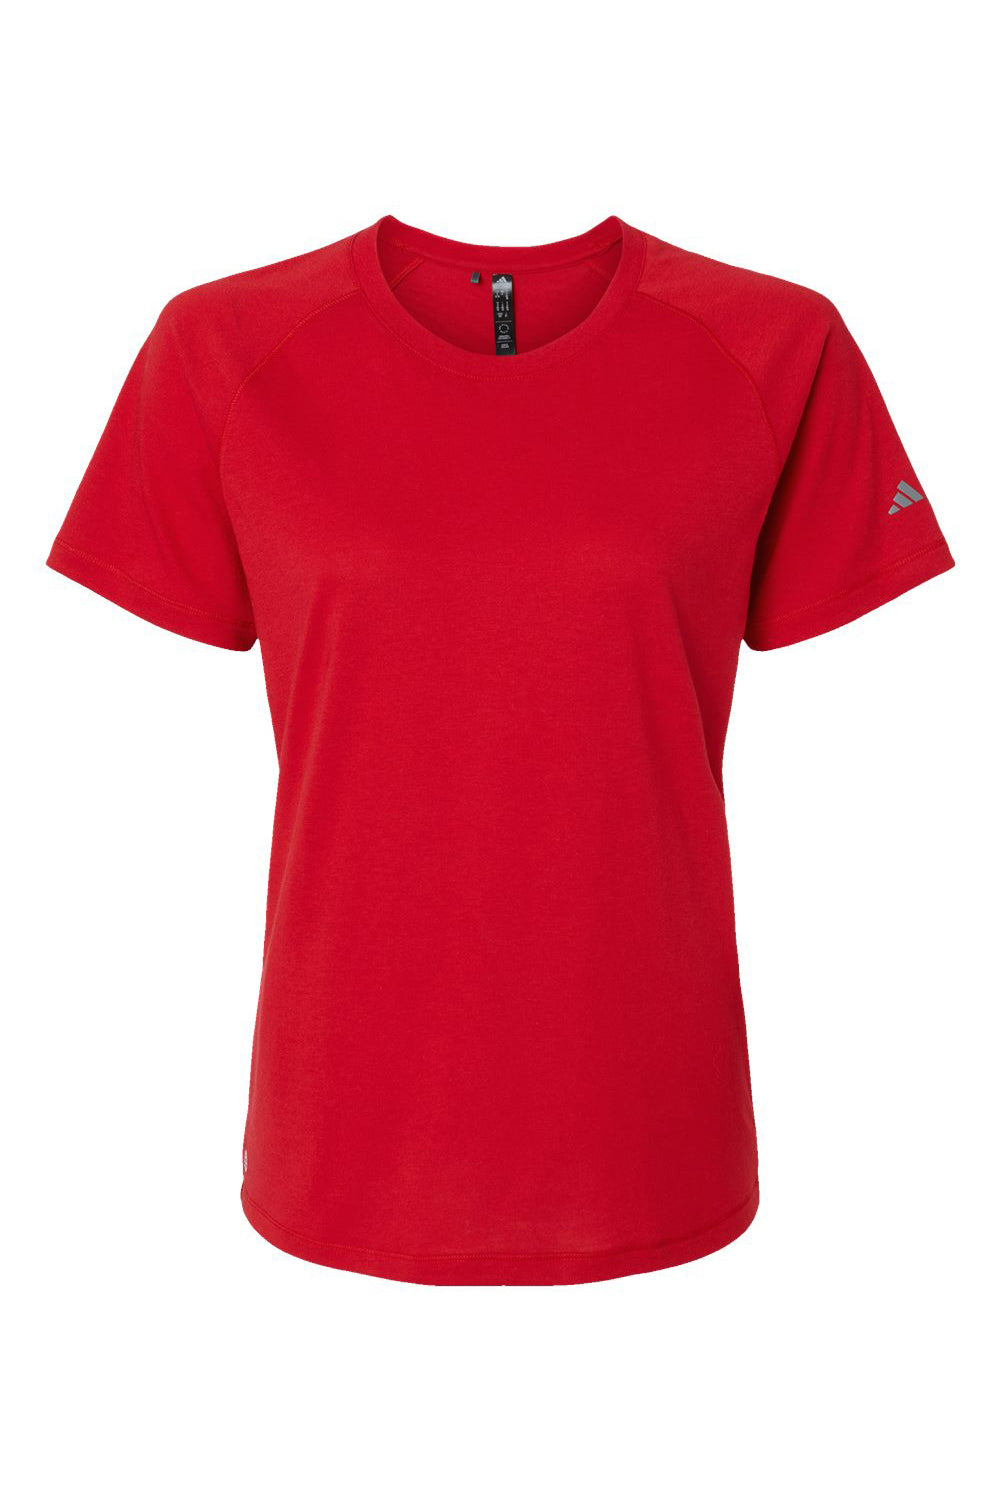 Adidas A557 Womens Short Sleeve Crewneck T-Shirt Power Red Flat Front